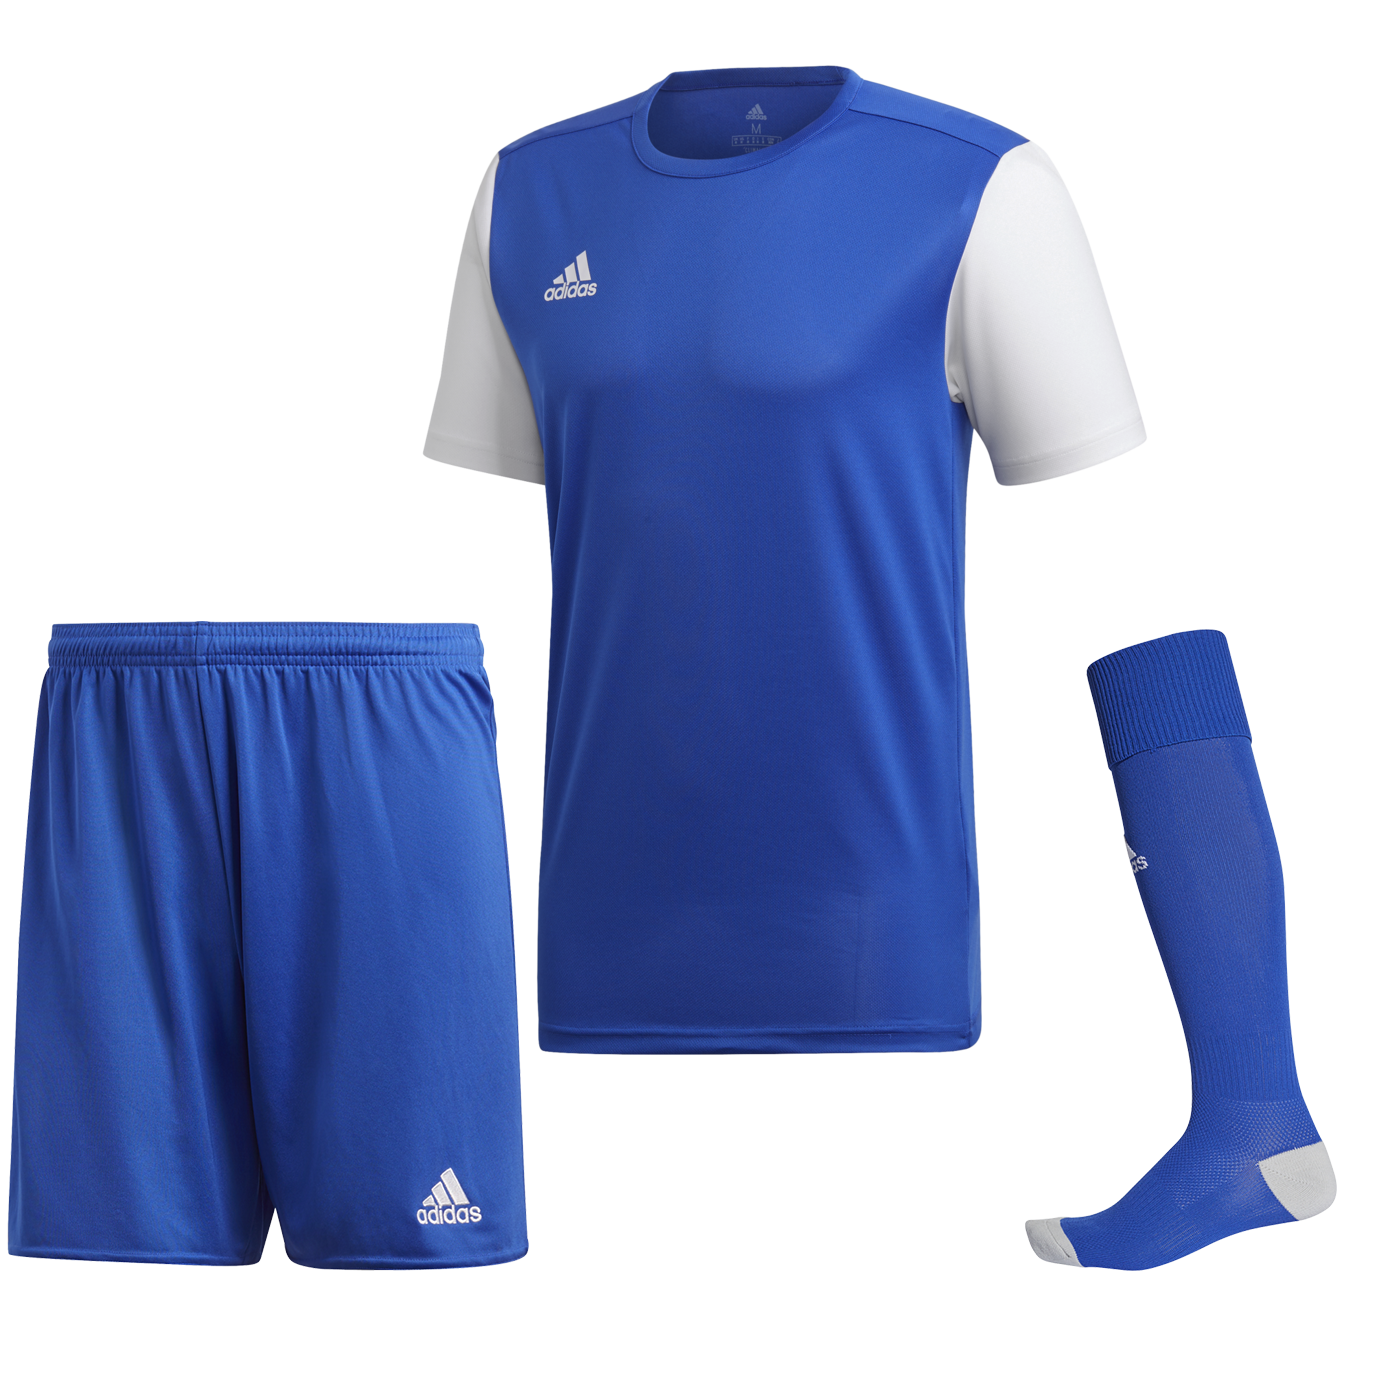 Adidas Estro 19 modrá/bílá UK S Pánské